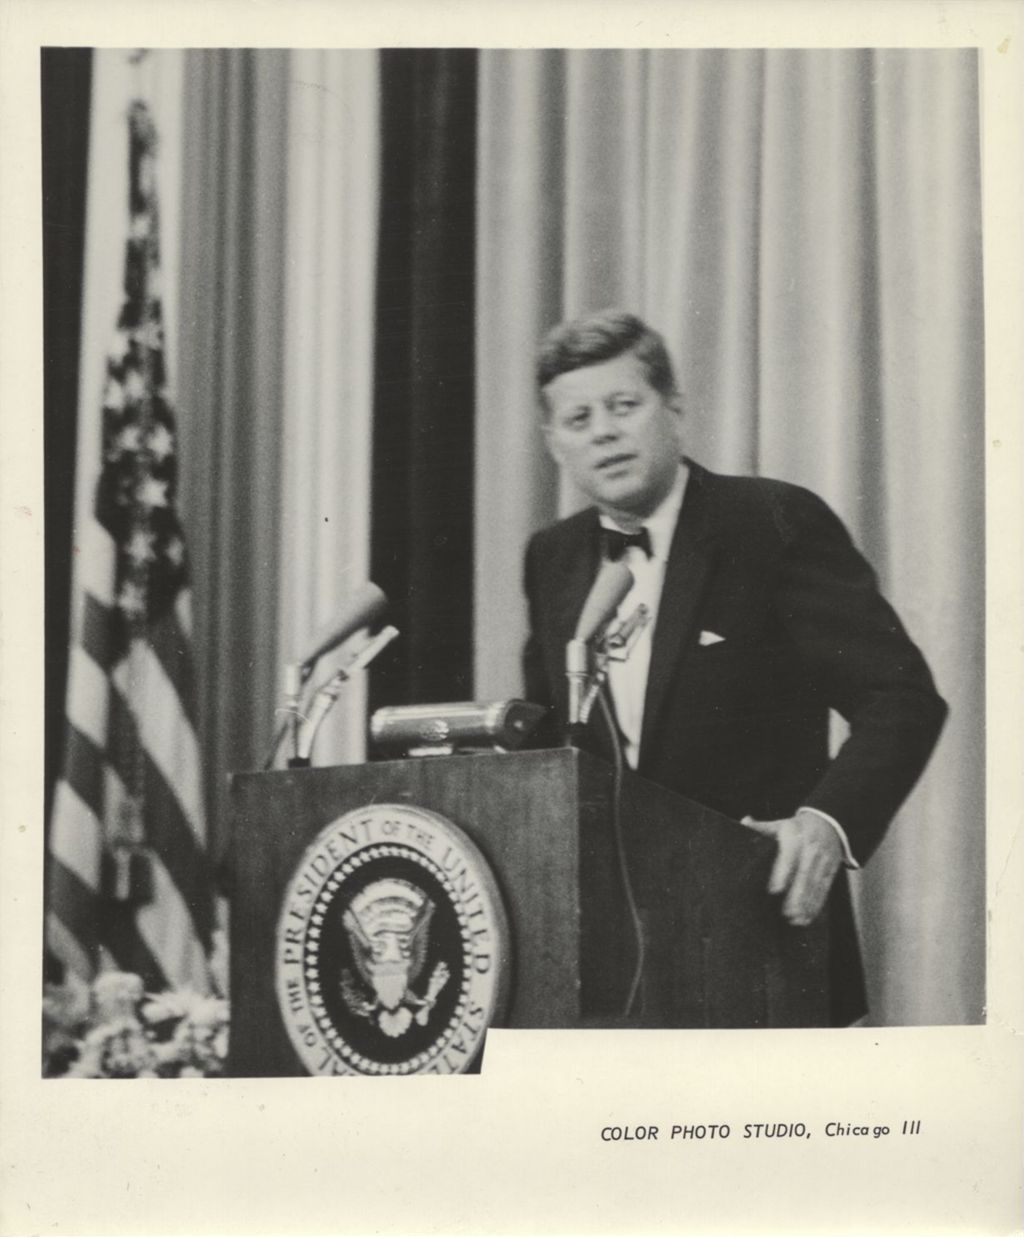 John F. Kennedy at a podium